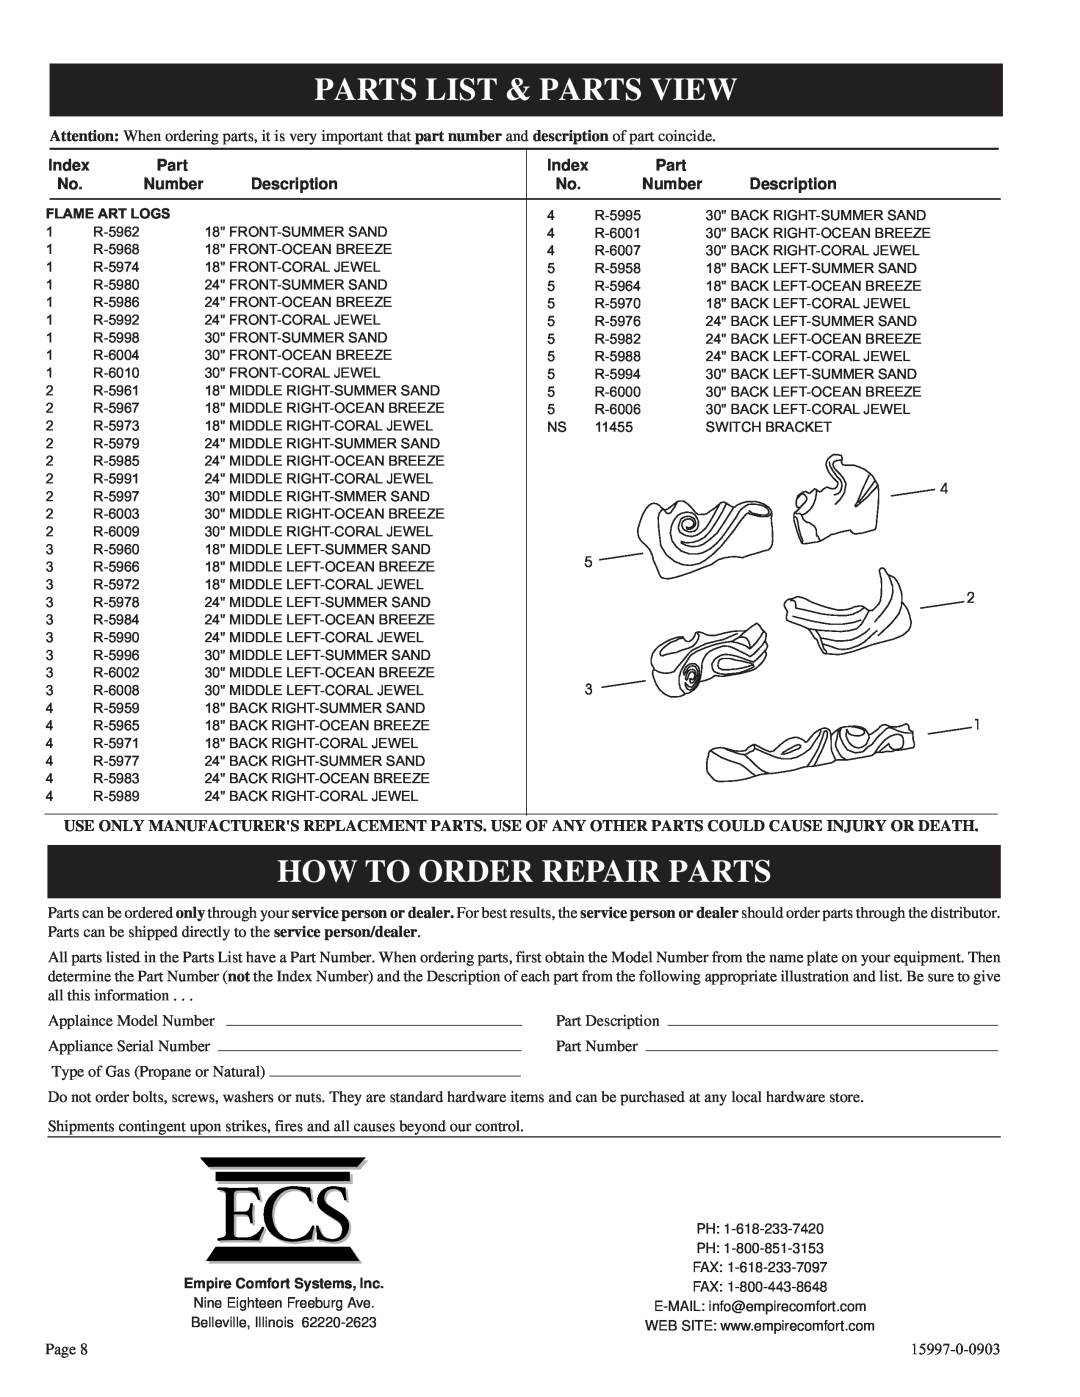 Empire Comfort Systems LS-18FAO-1 Parts List & Parts View, How To Order Repair Parts, Index, Number, Description 